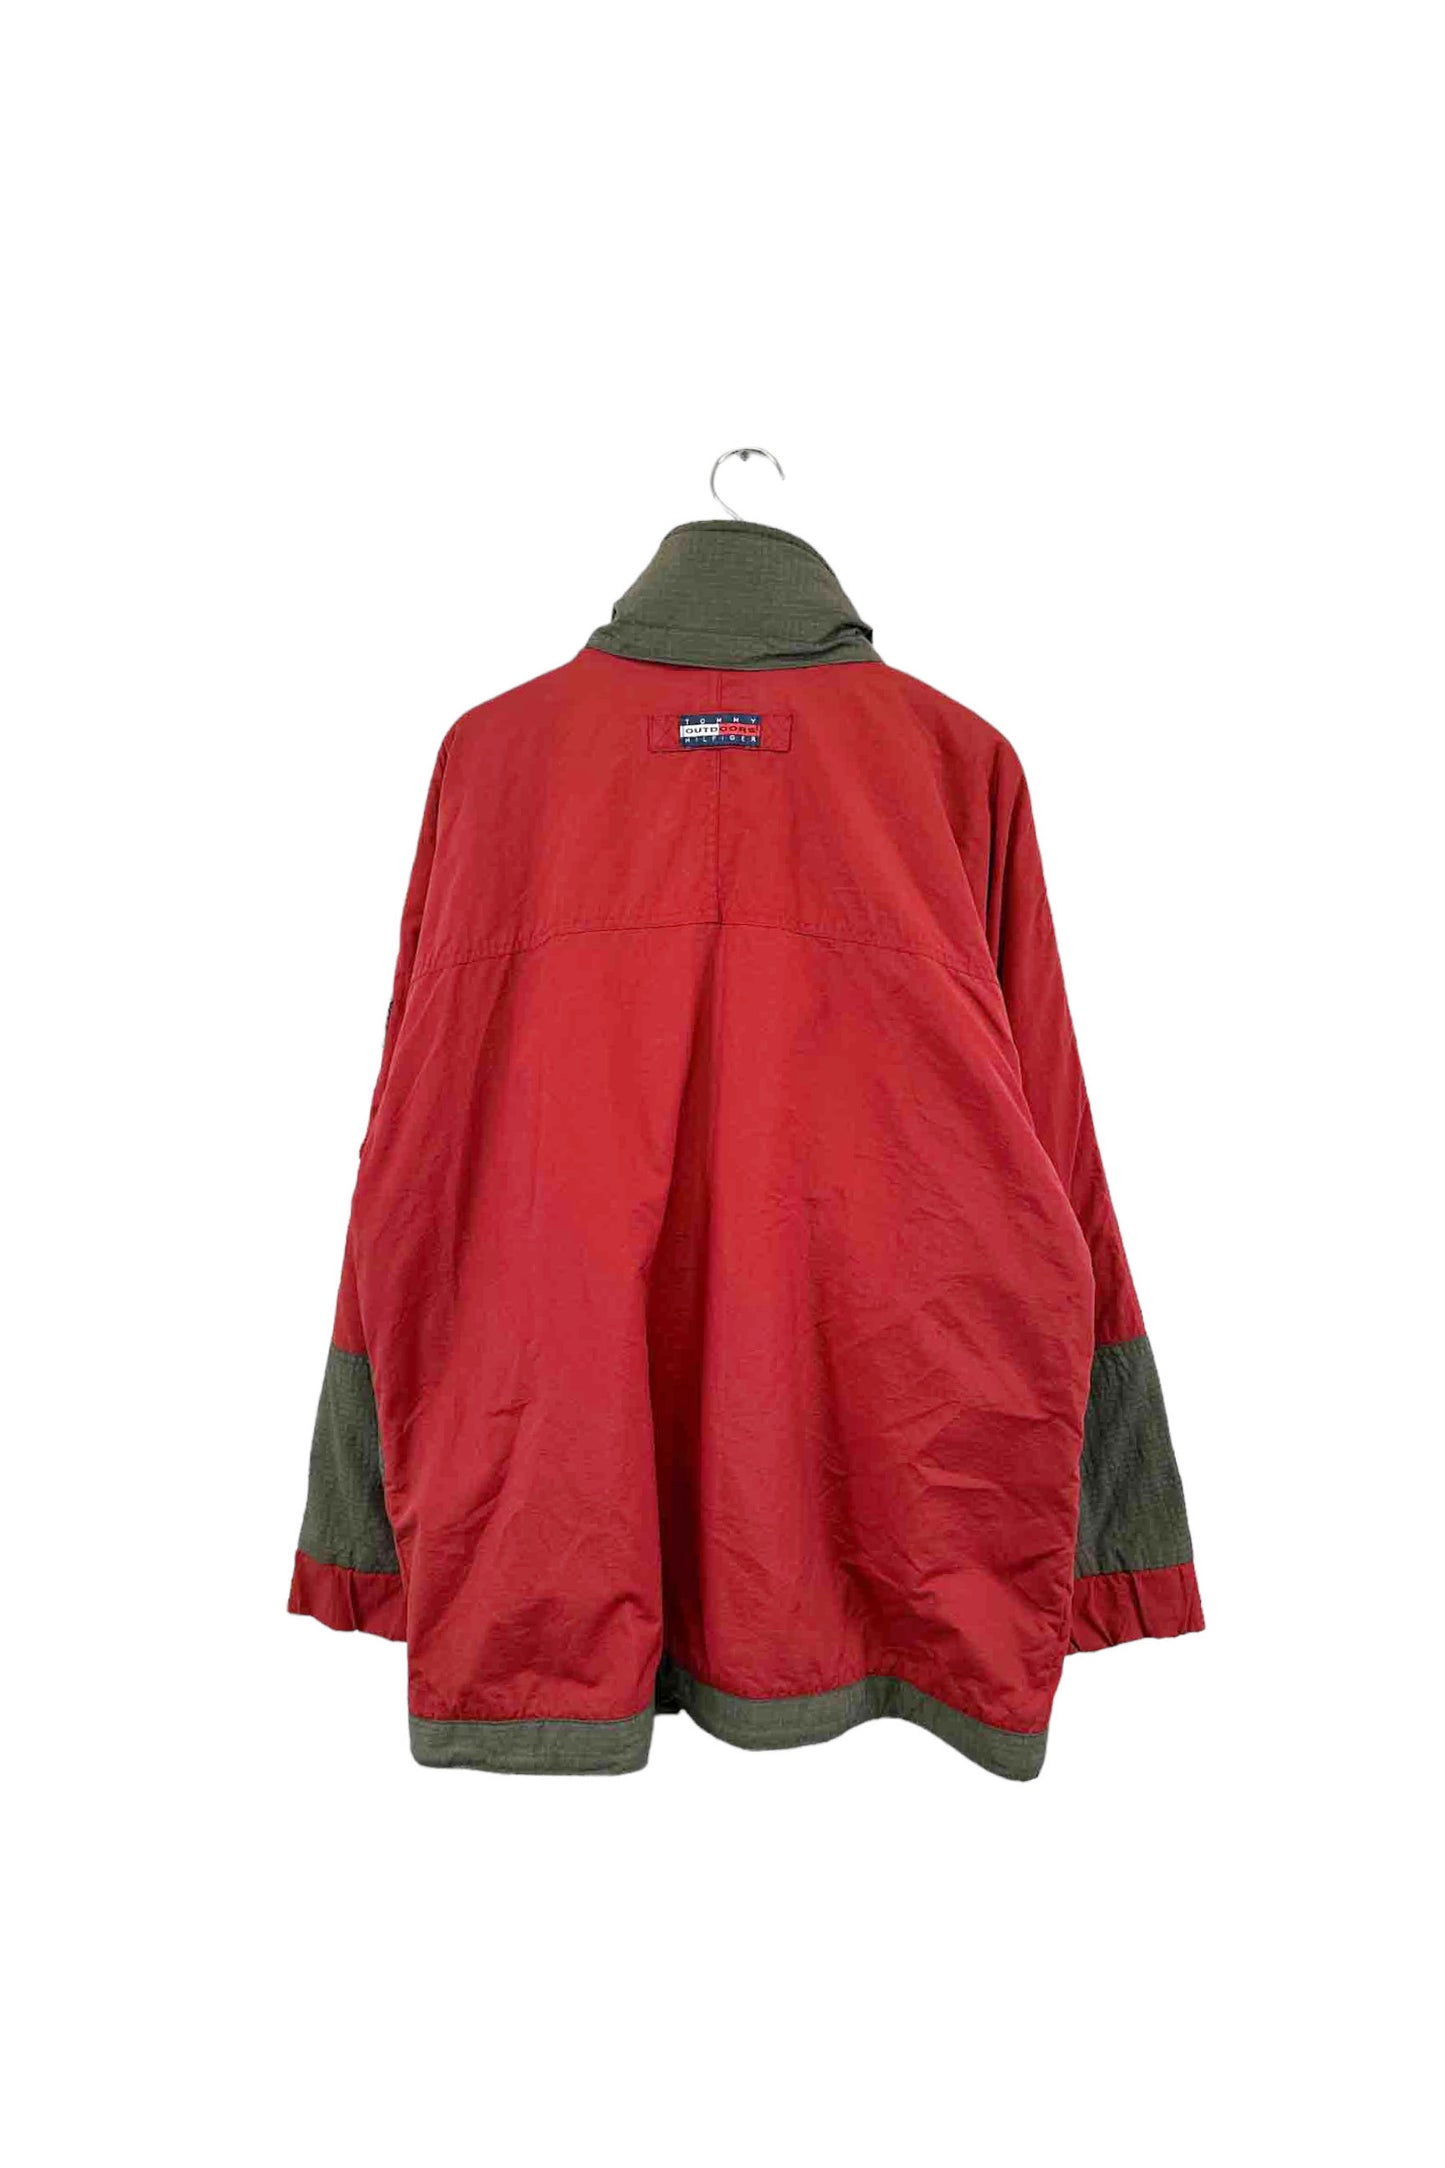 90's TOMMY HILFIGER red nylon jacket